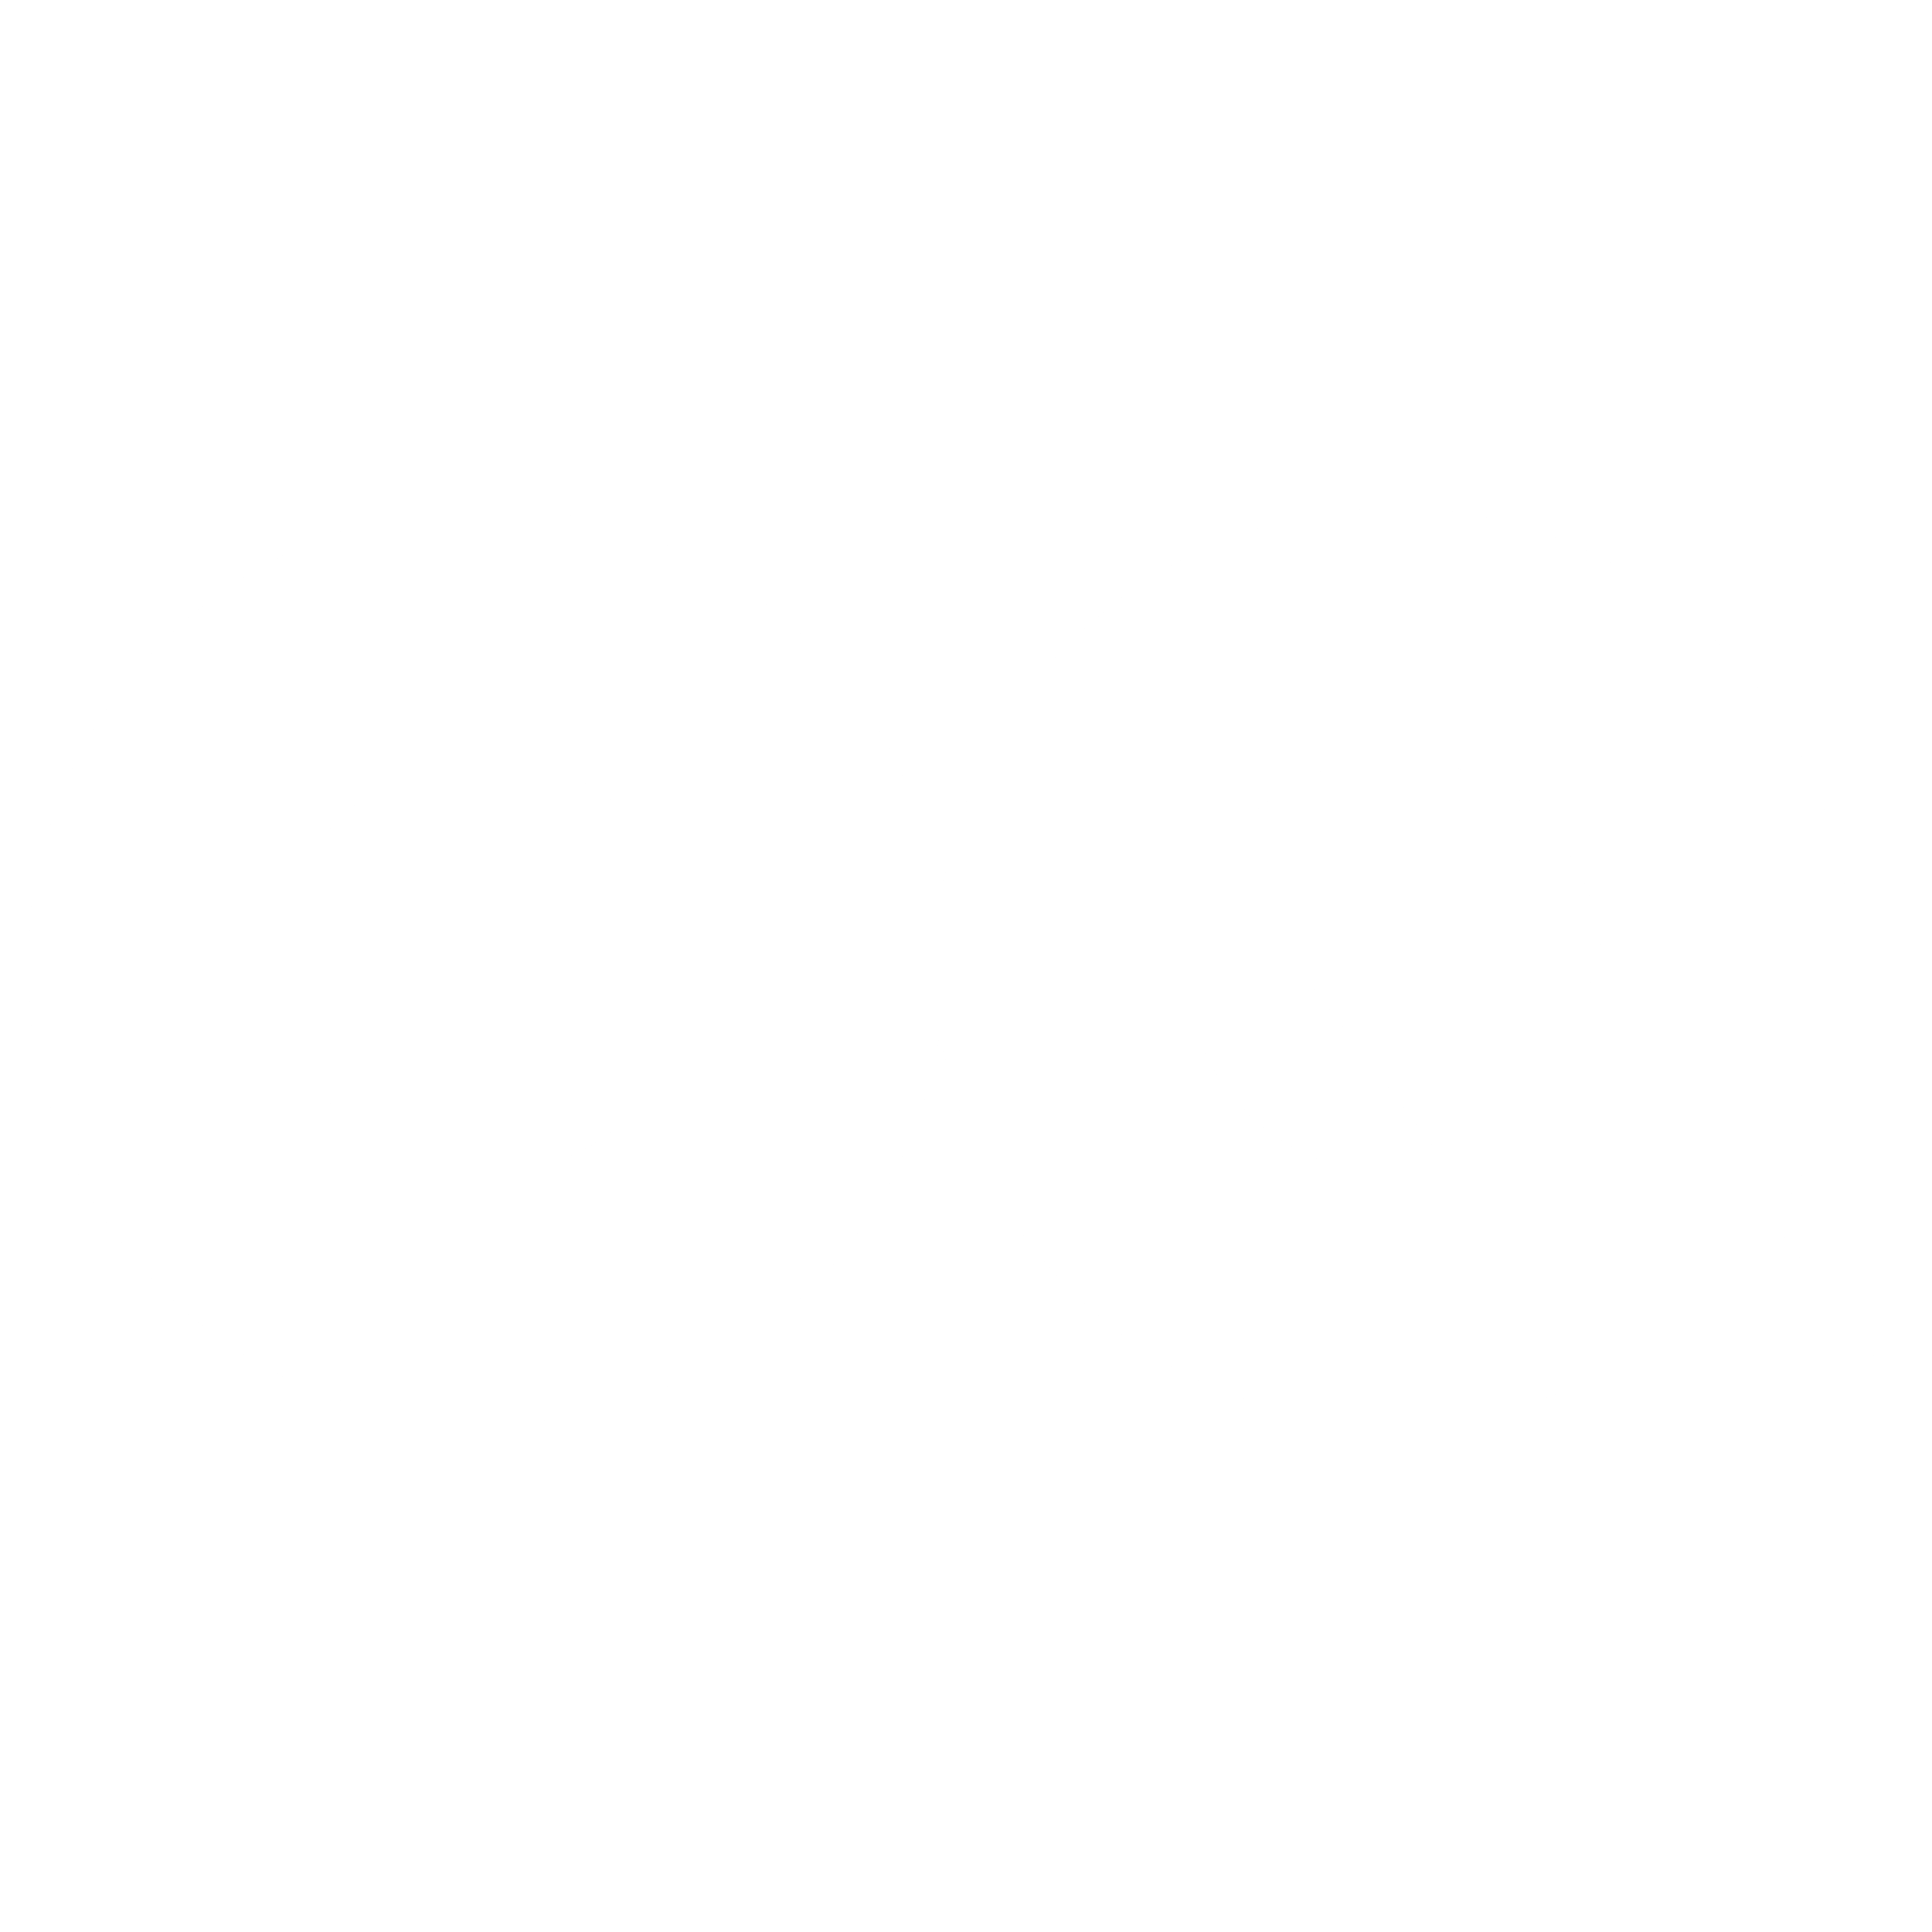 gq-magazine-logo-black-and-white.png